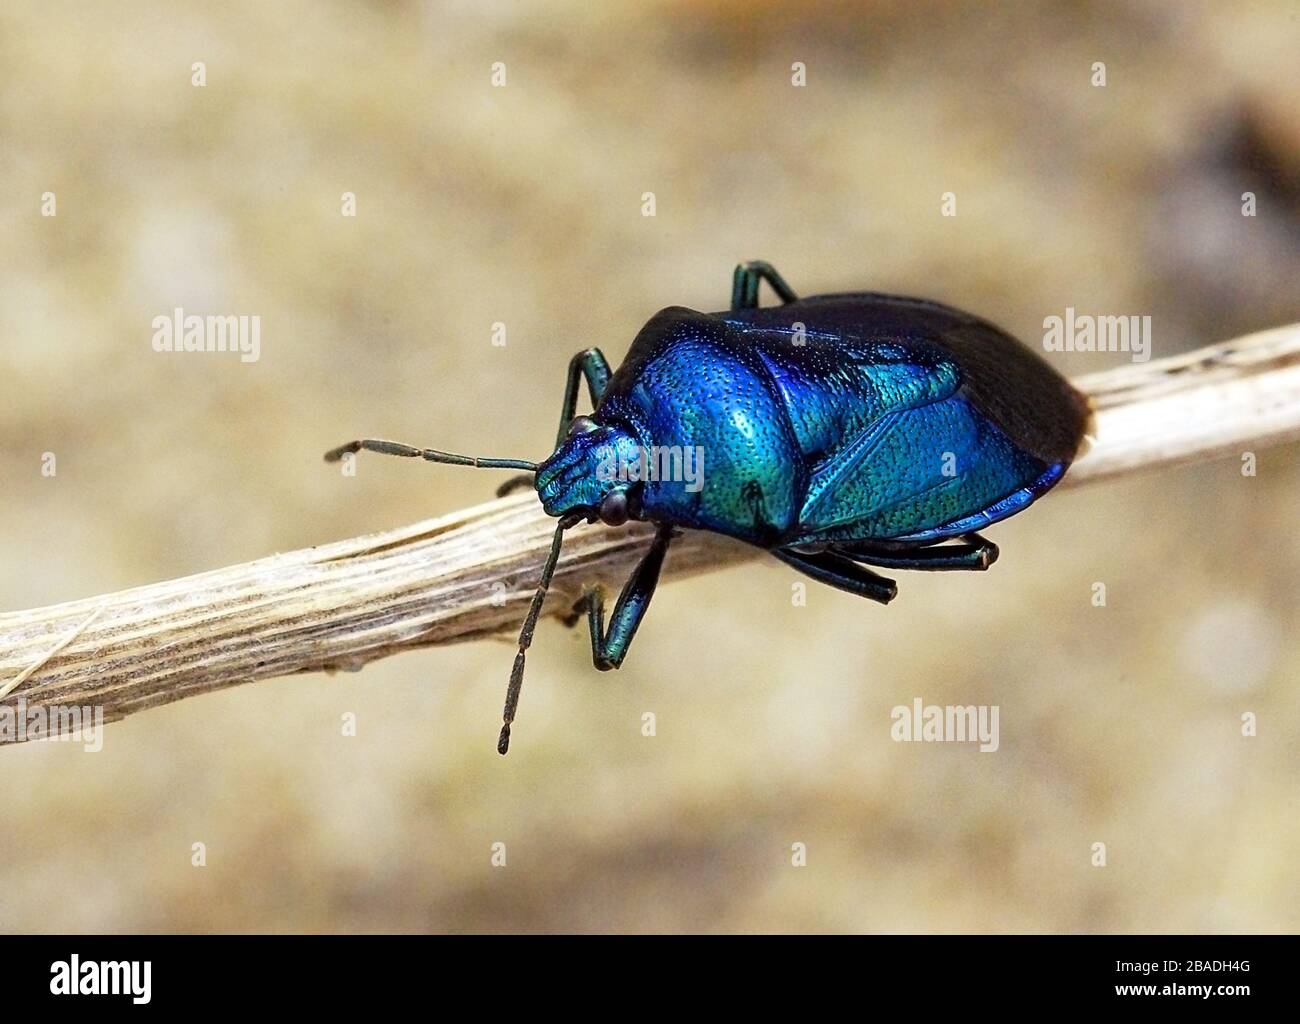 Zicrona caerulea, un insecto de escudo depredador de Europa Foto de stock